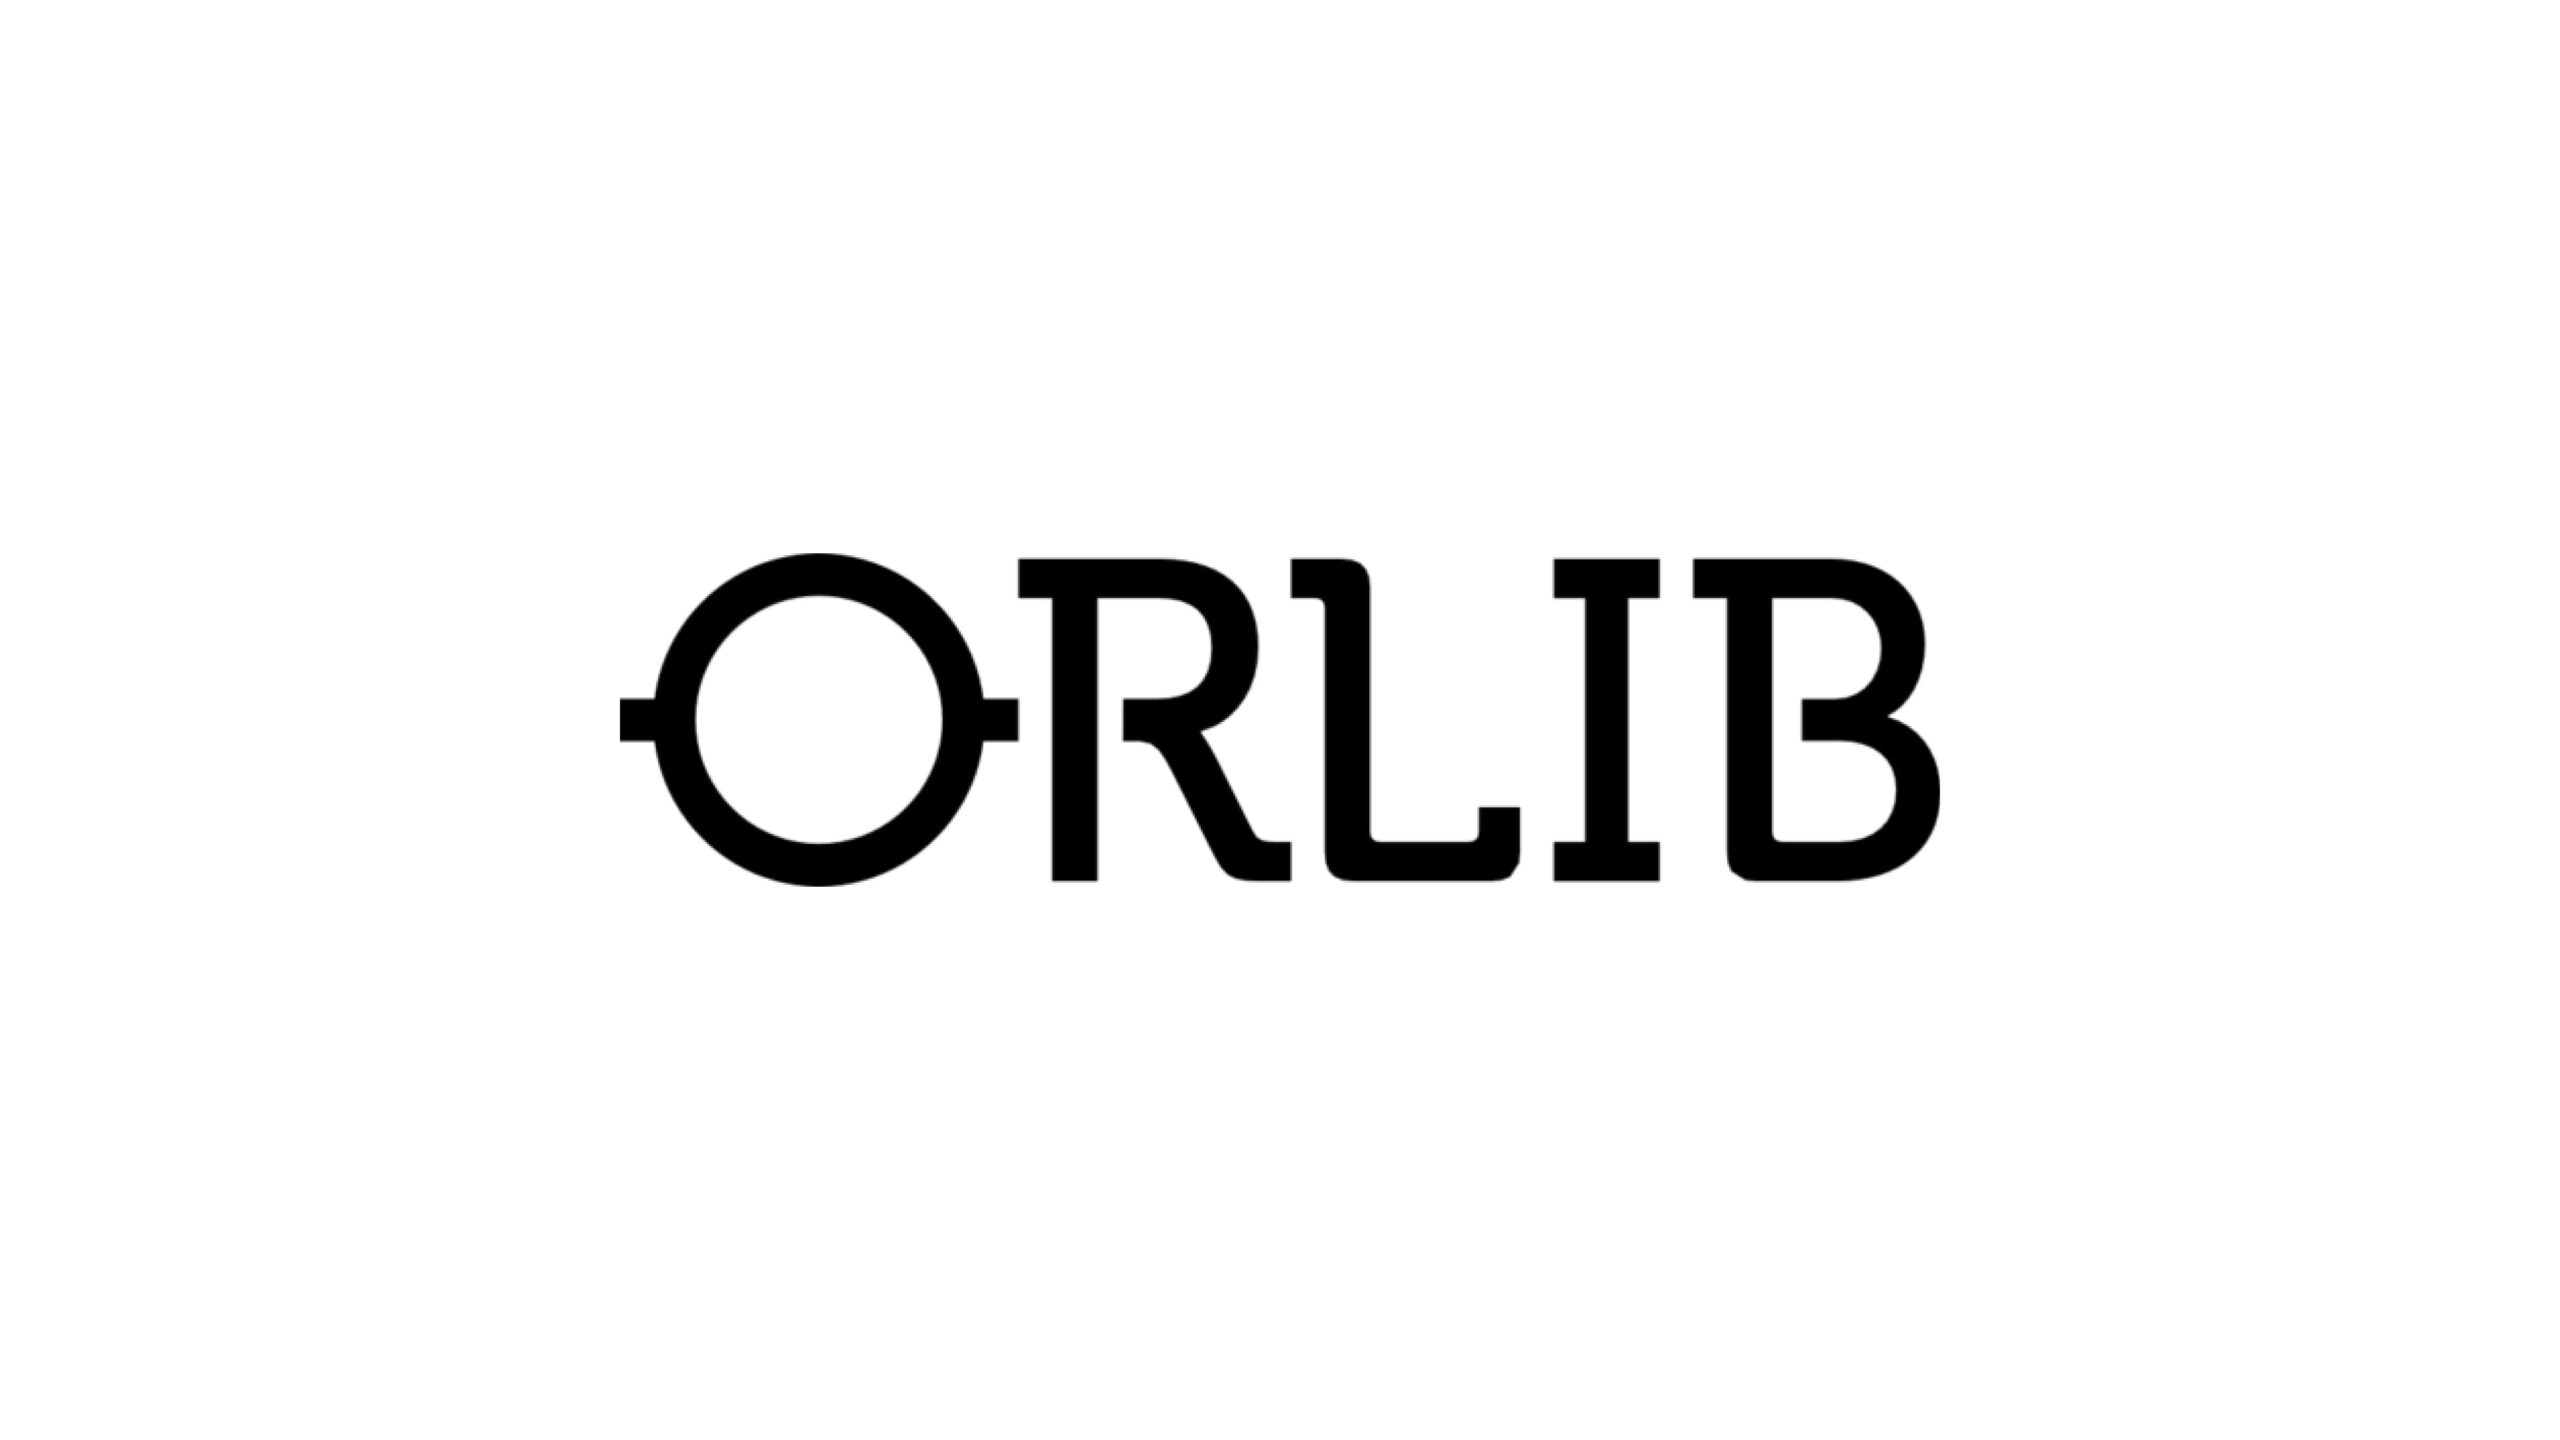 ORLIB株式会社が第三者割当増資により資金調達を実施